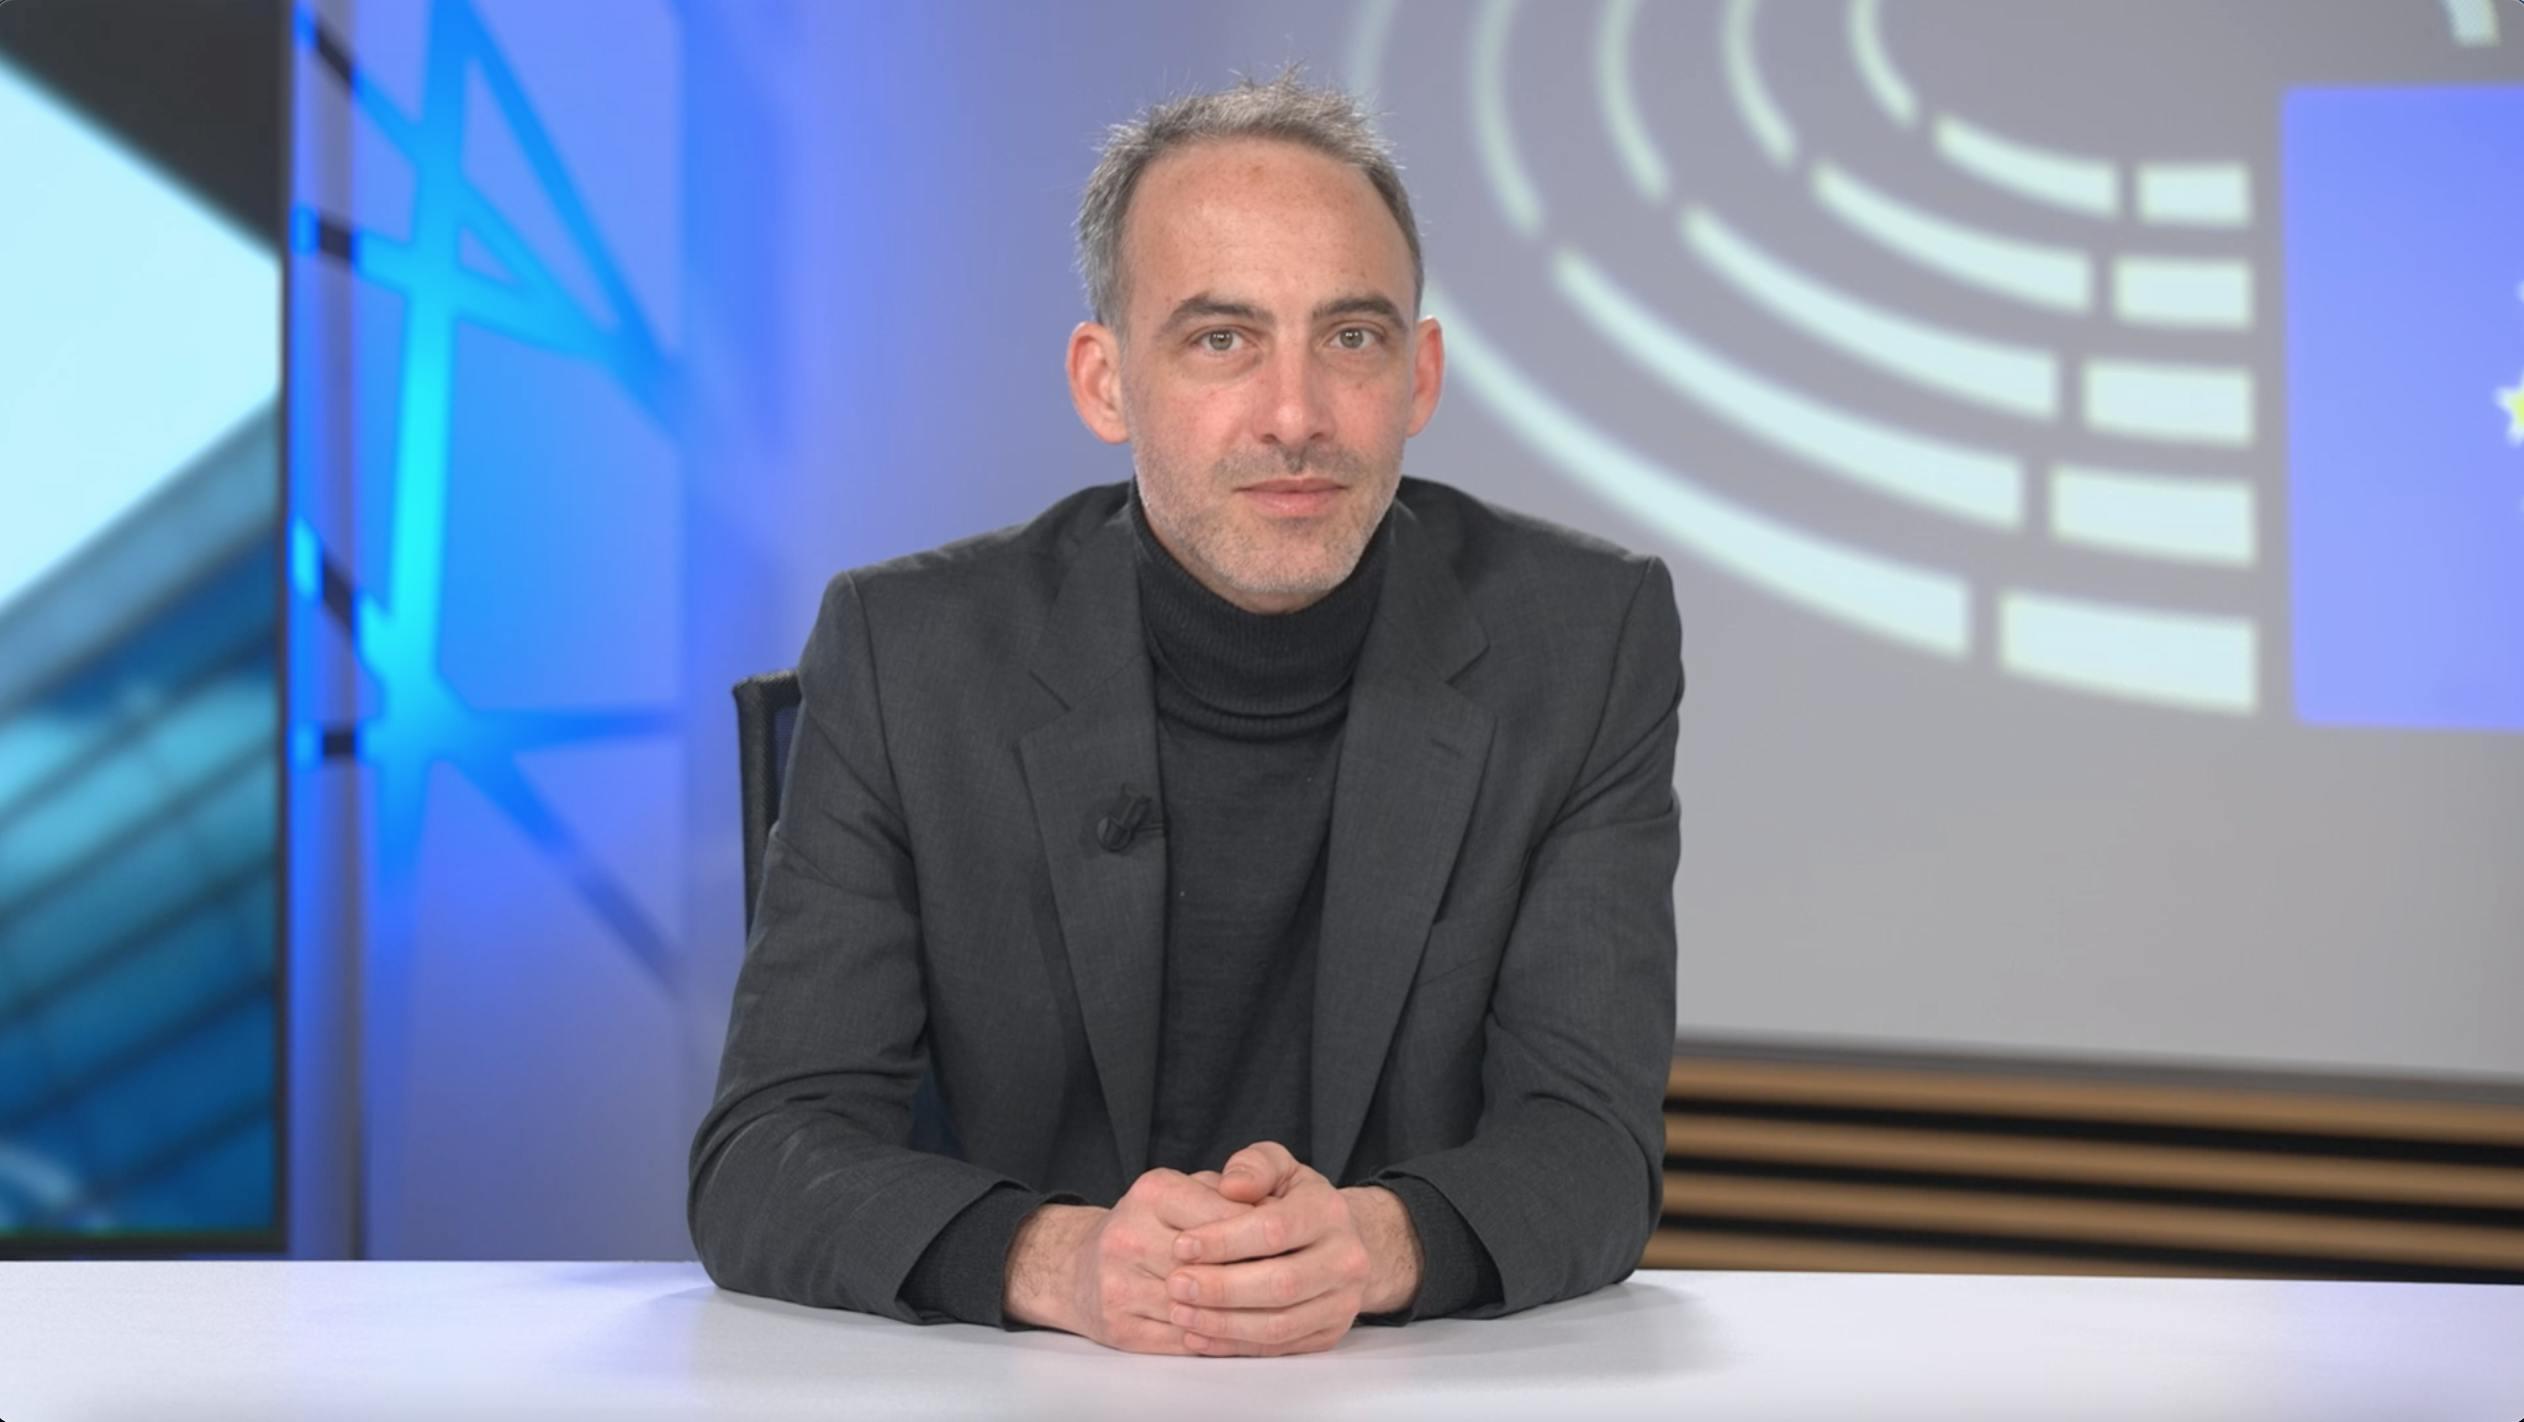 Four questions to MEP Raphaël Glucksmann